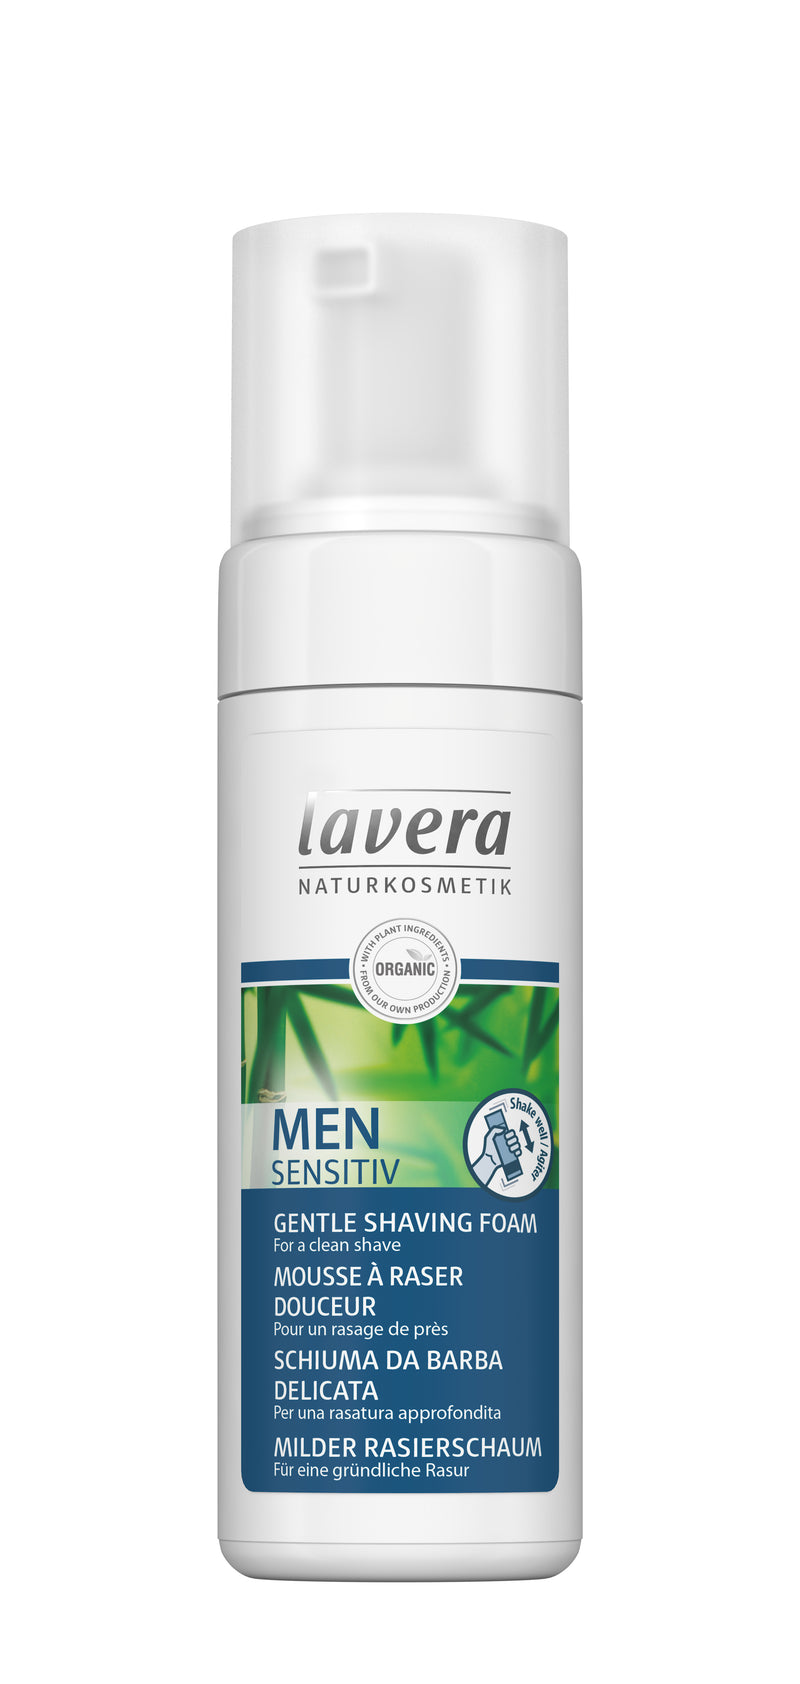 Lavera Men Sensitive : Organic Gentle Shaving Foam 150ml